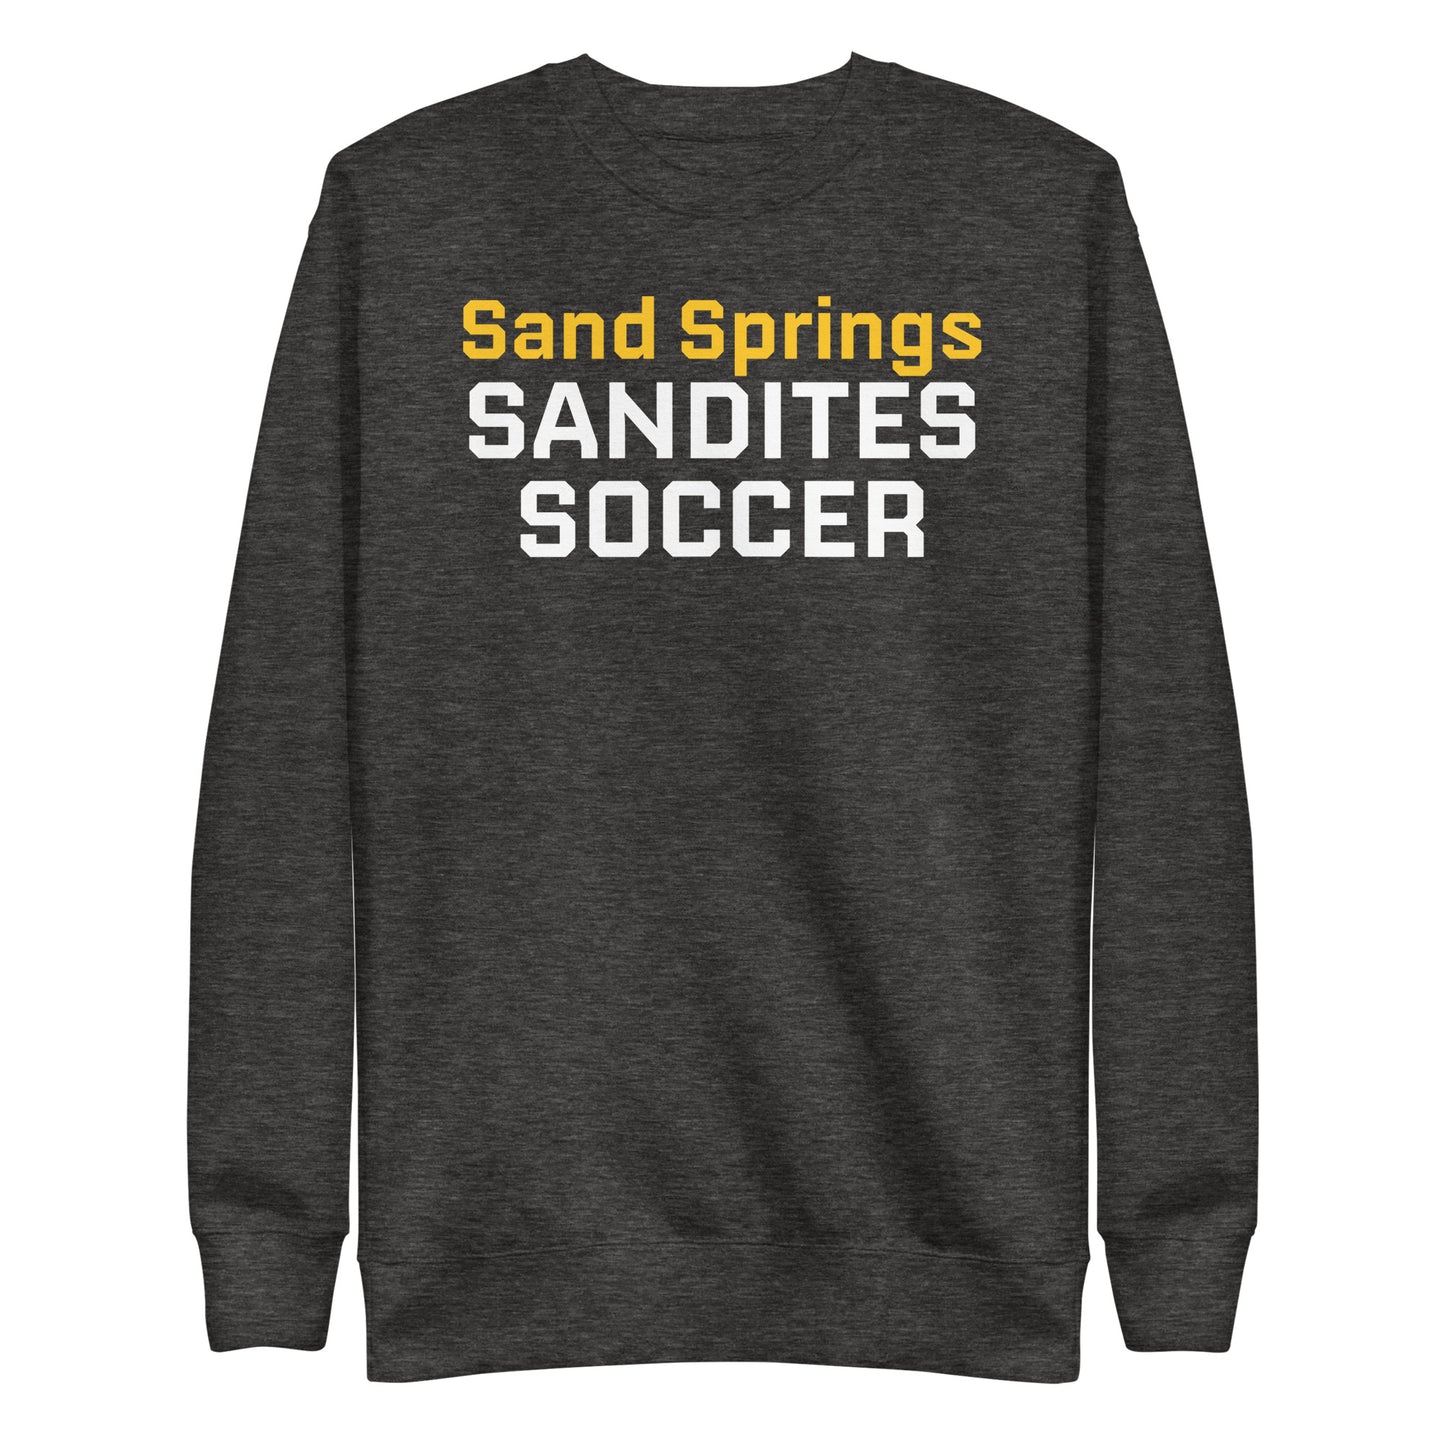 Sandites Soccer - Adult Sweatshirt